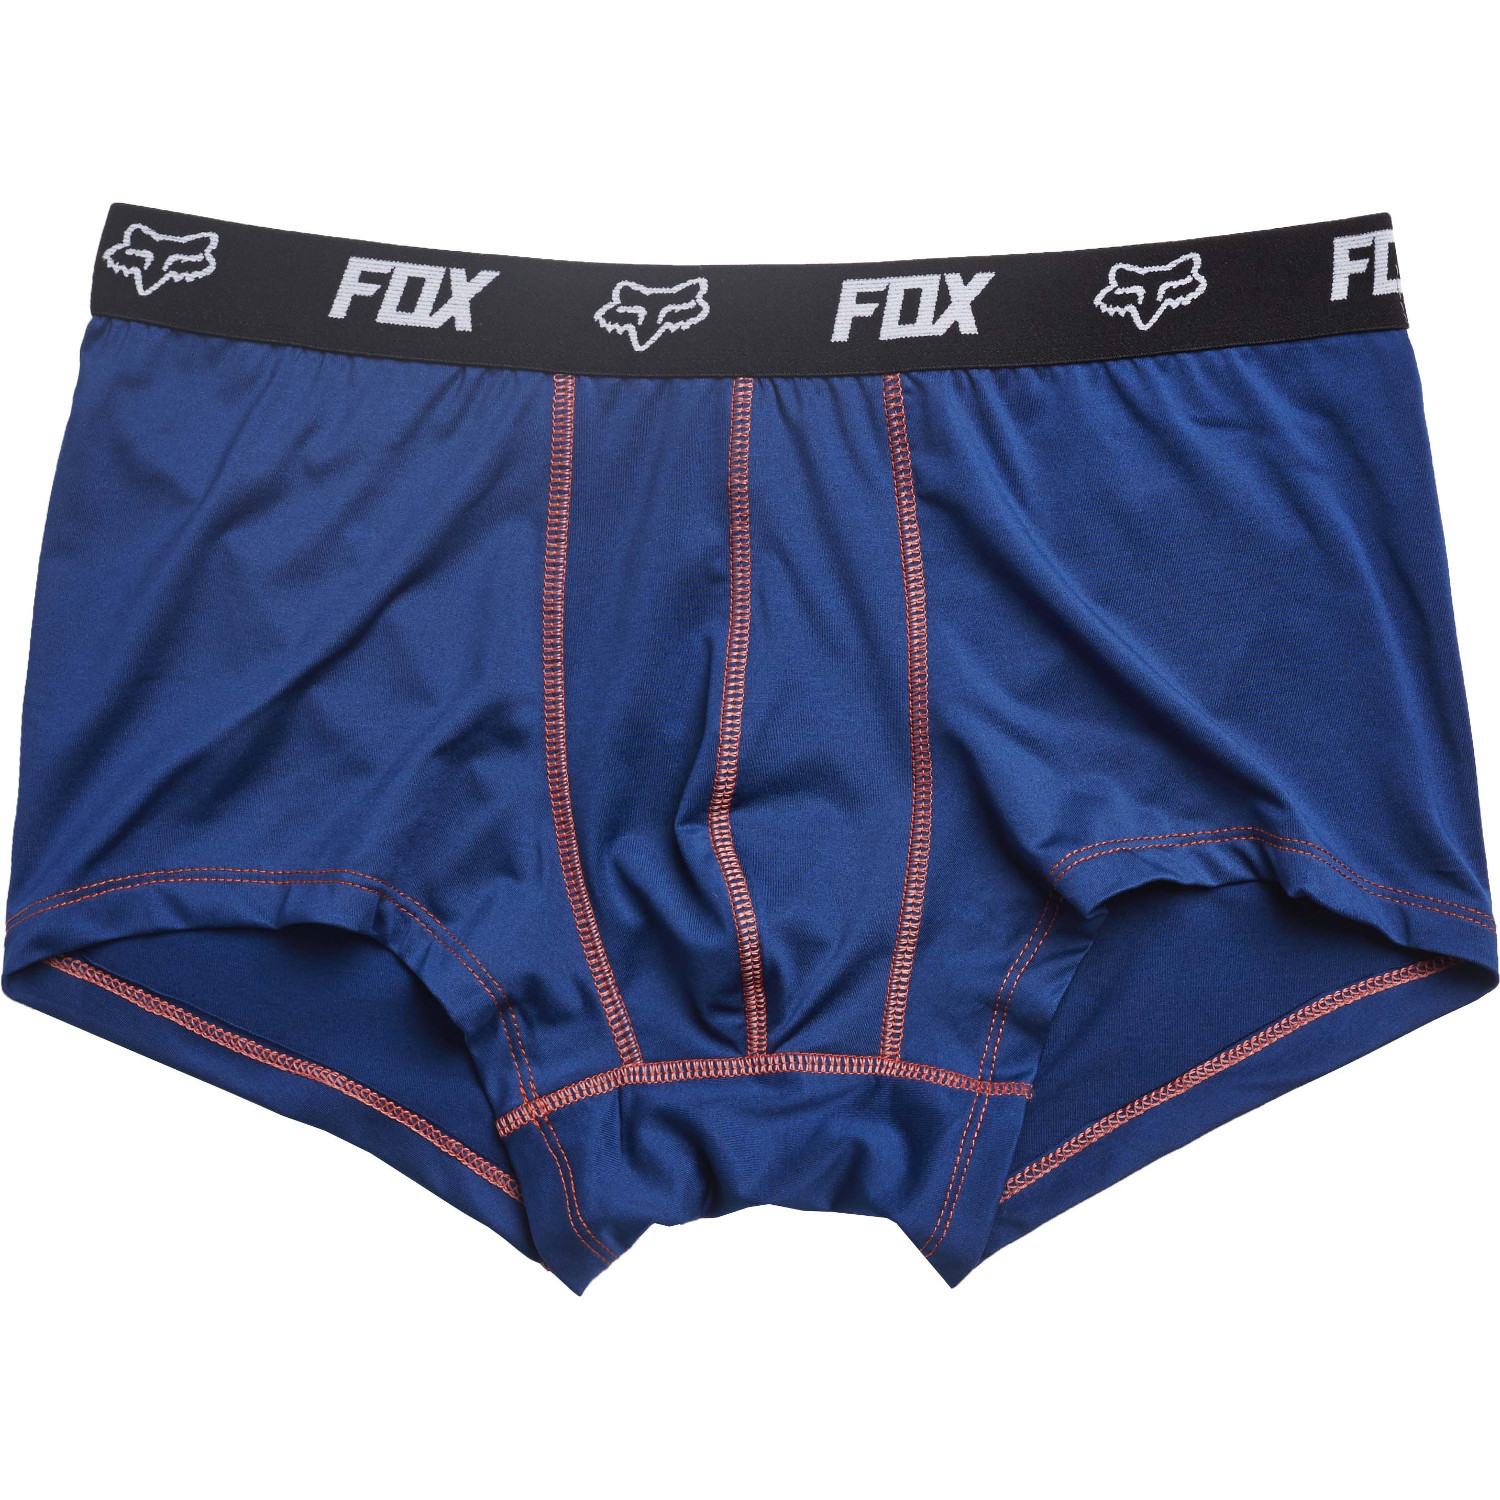 Fox Boxer Shorts Diablo Navy